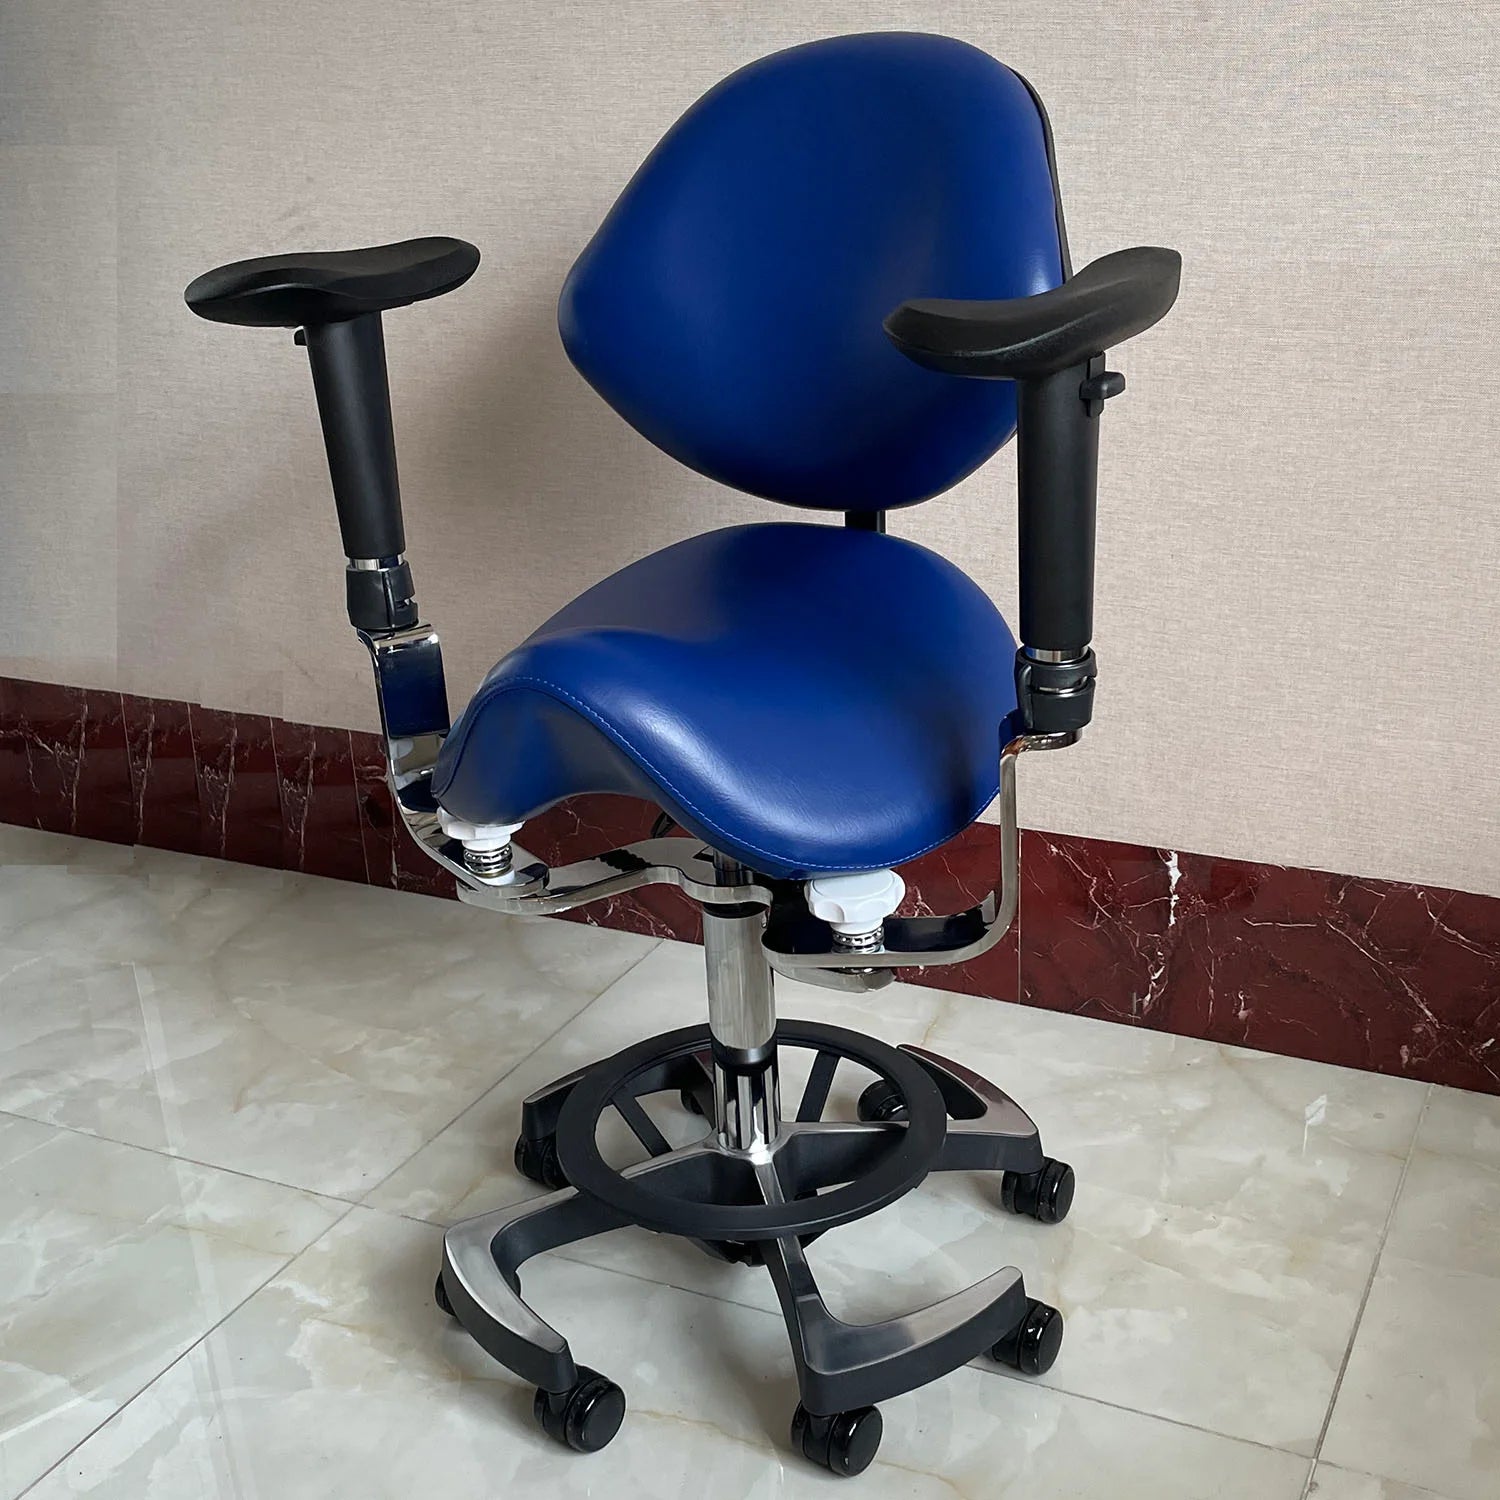 surgery stool with flexible armrest 